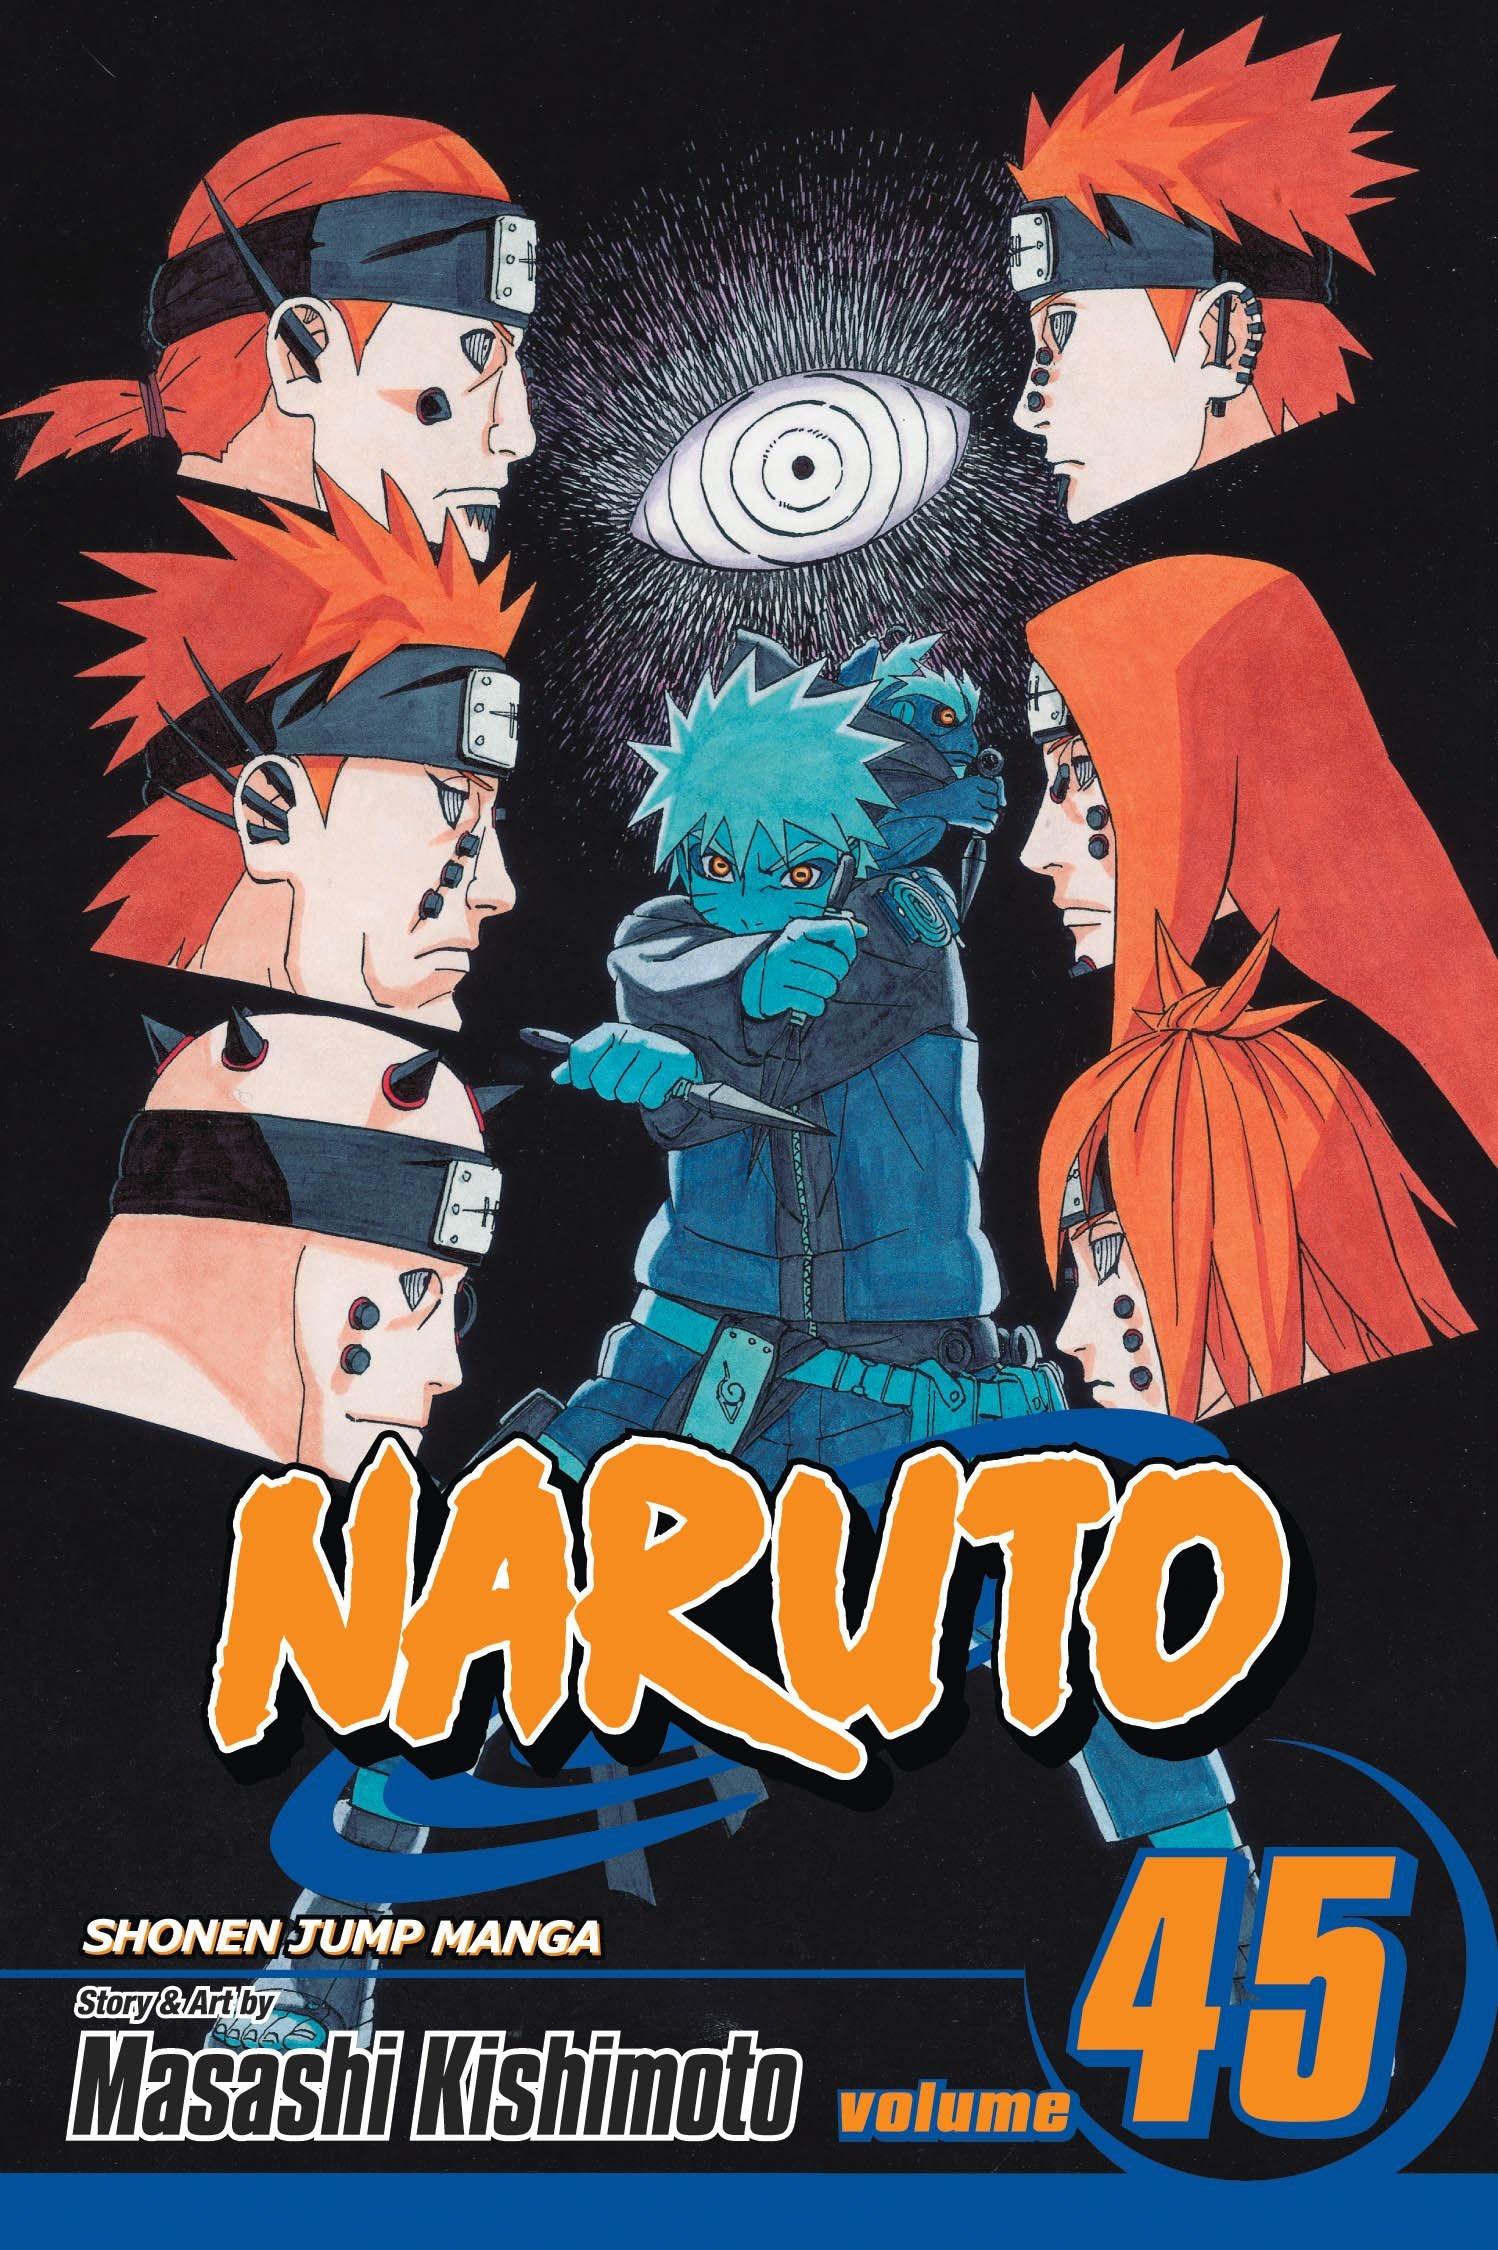 BD: Lançamento – Naruto vol. 17